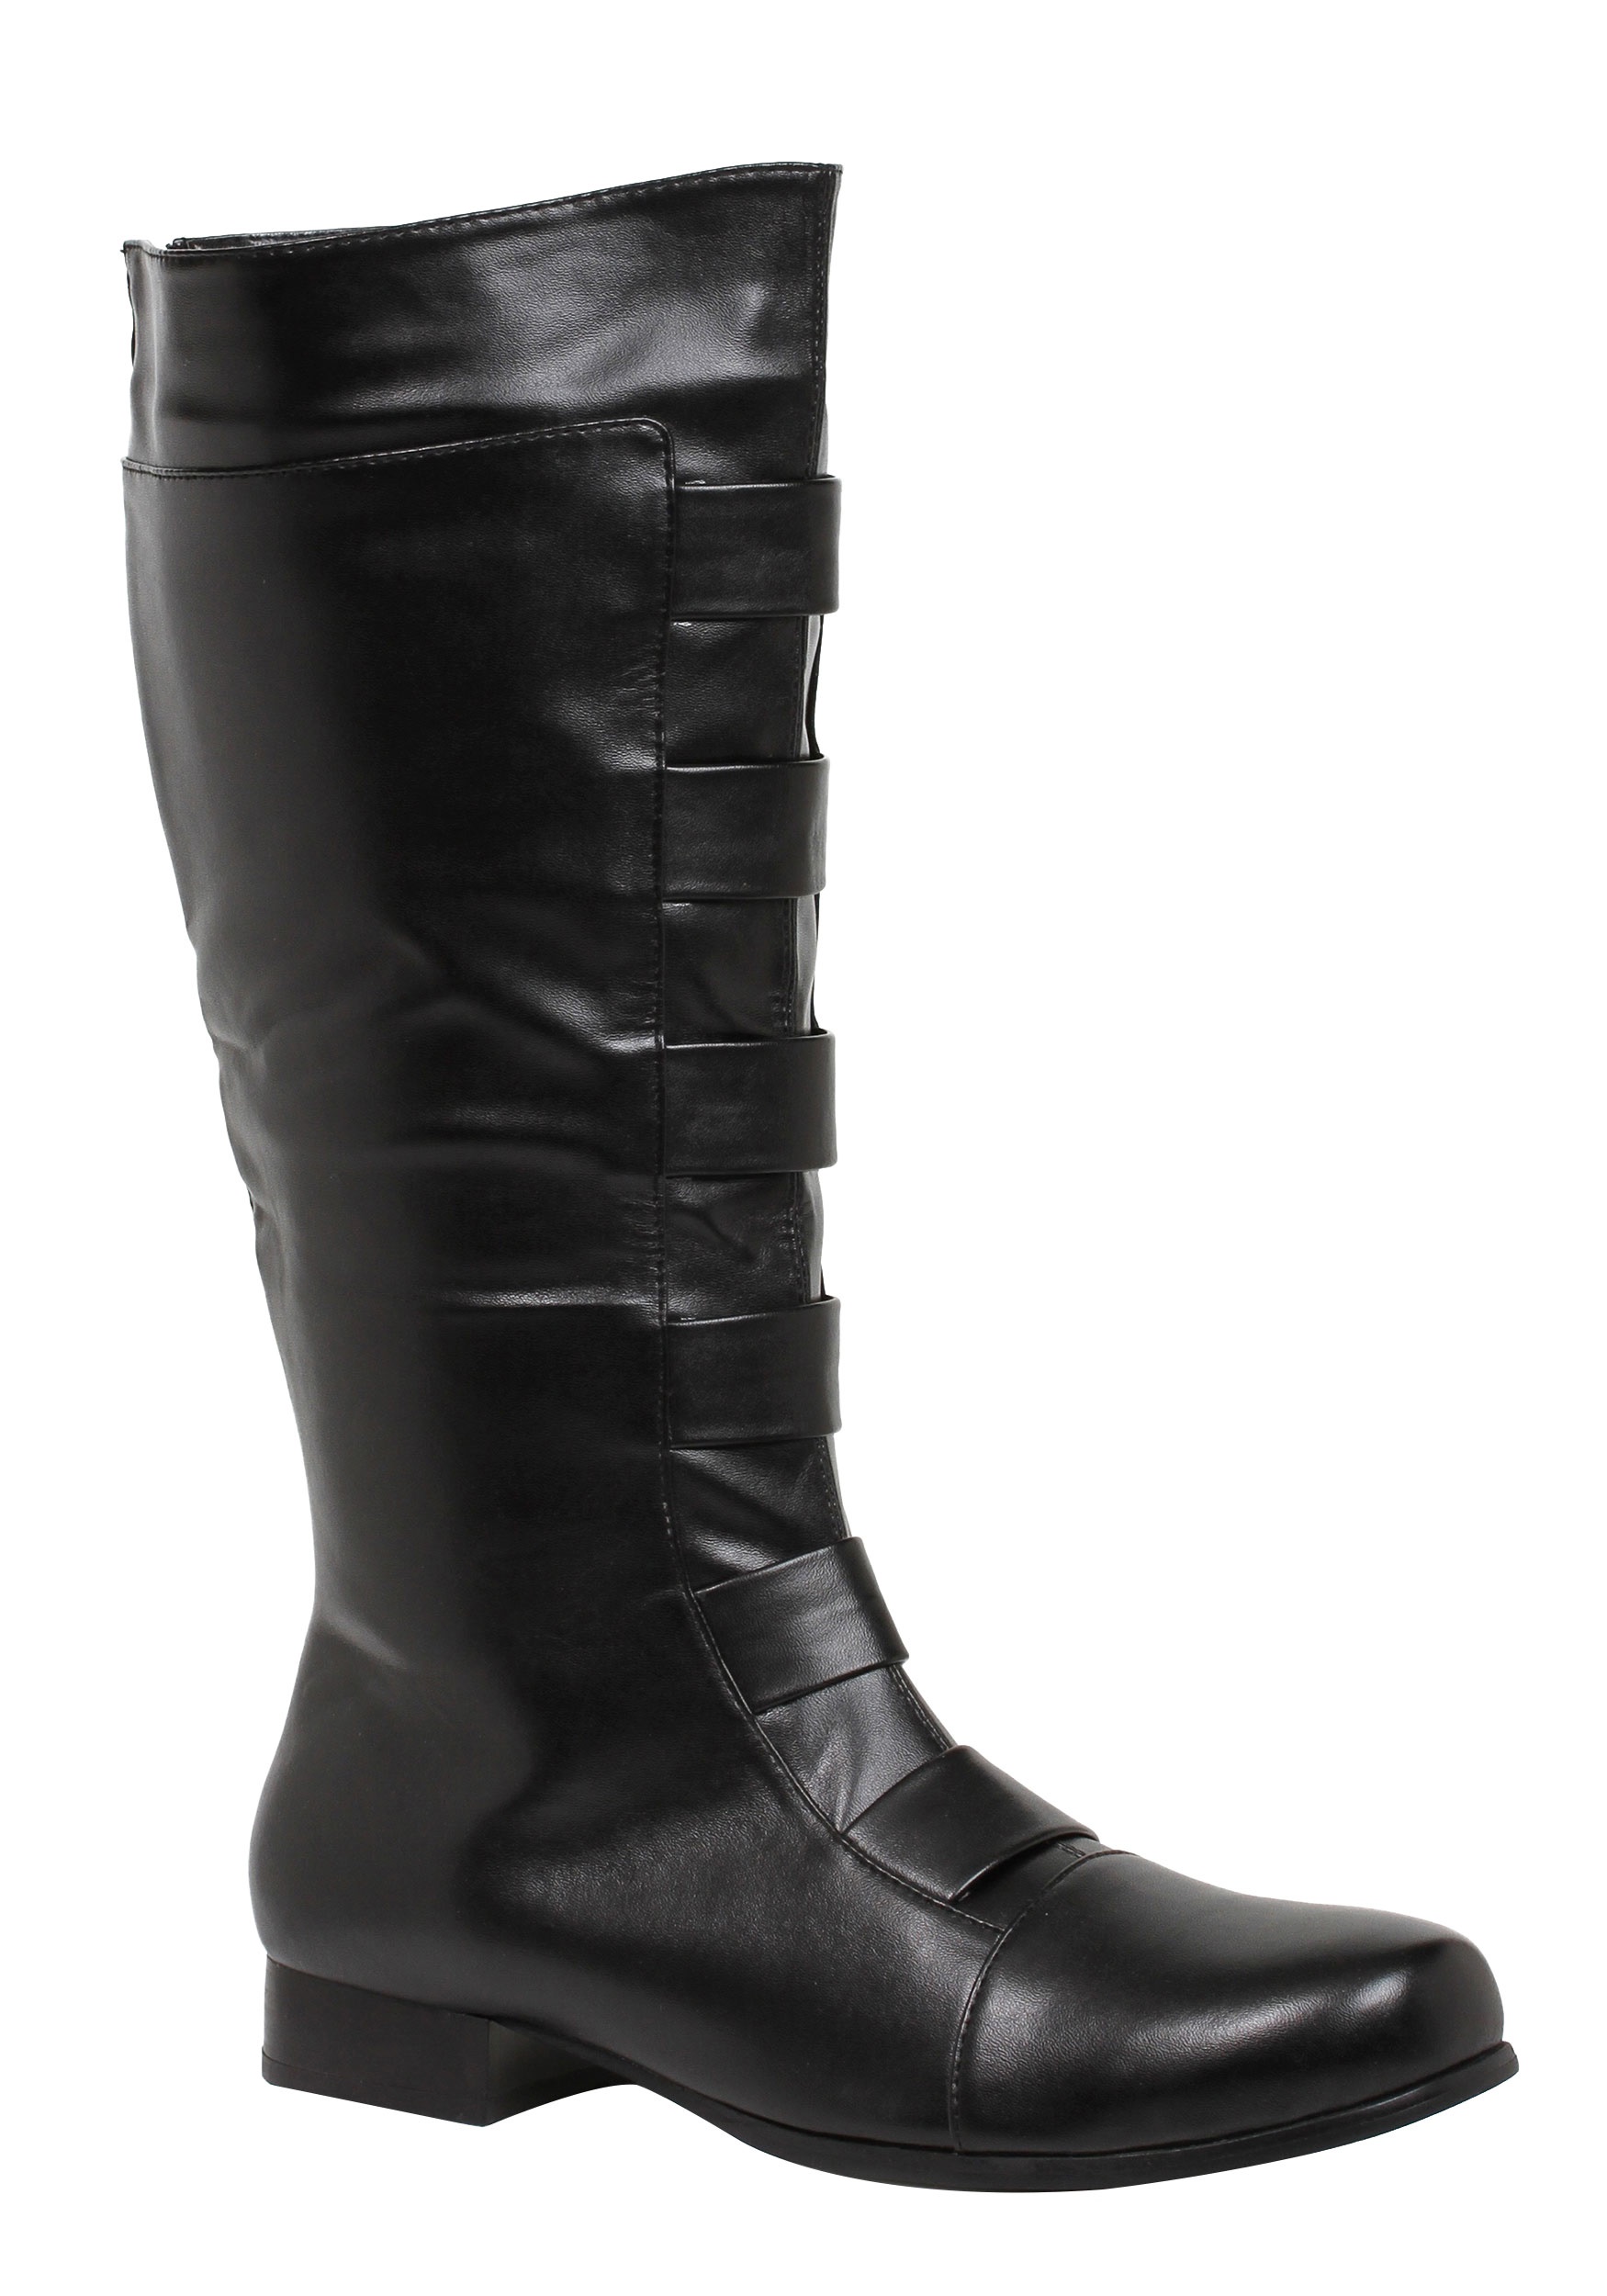 Image of Adult Black Superhero Boots | Superhero Costume Accessories ID EES121MARCBK-S